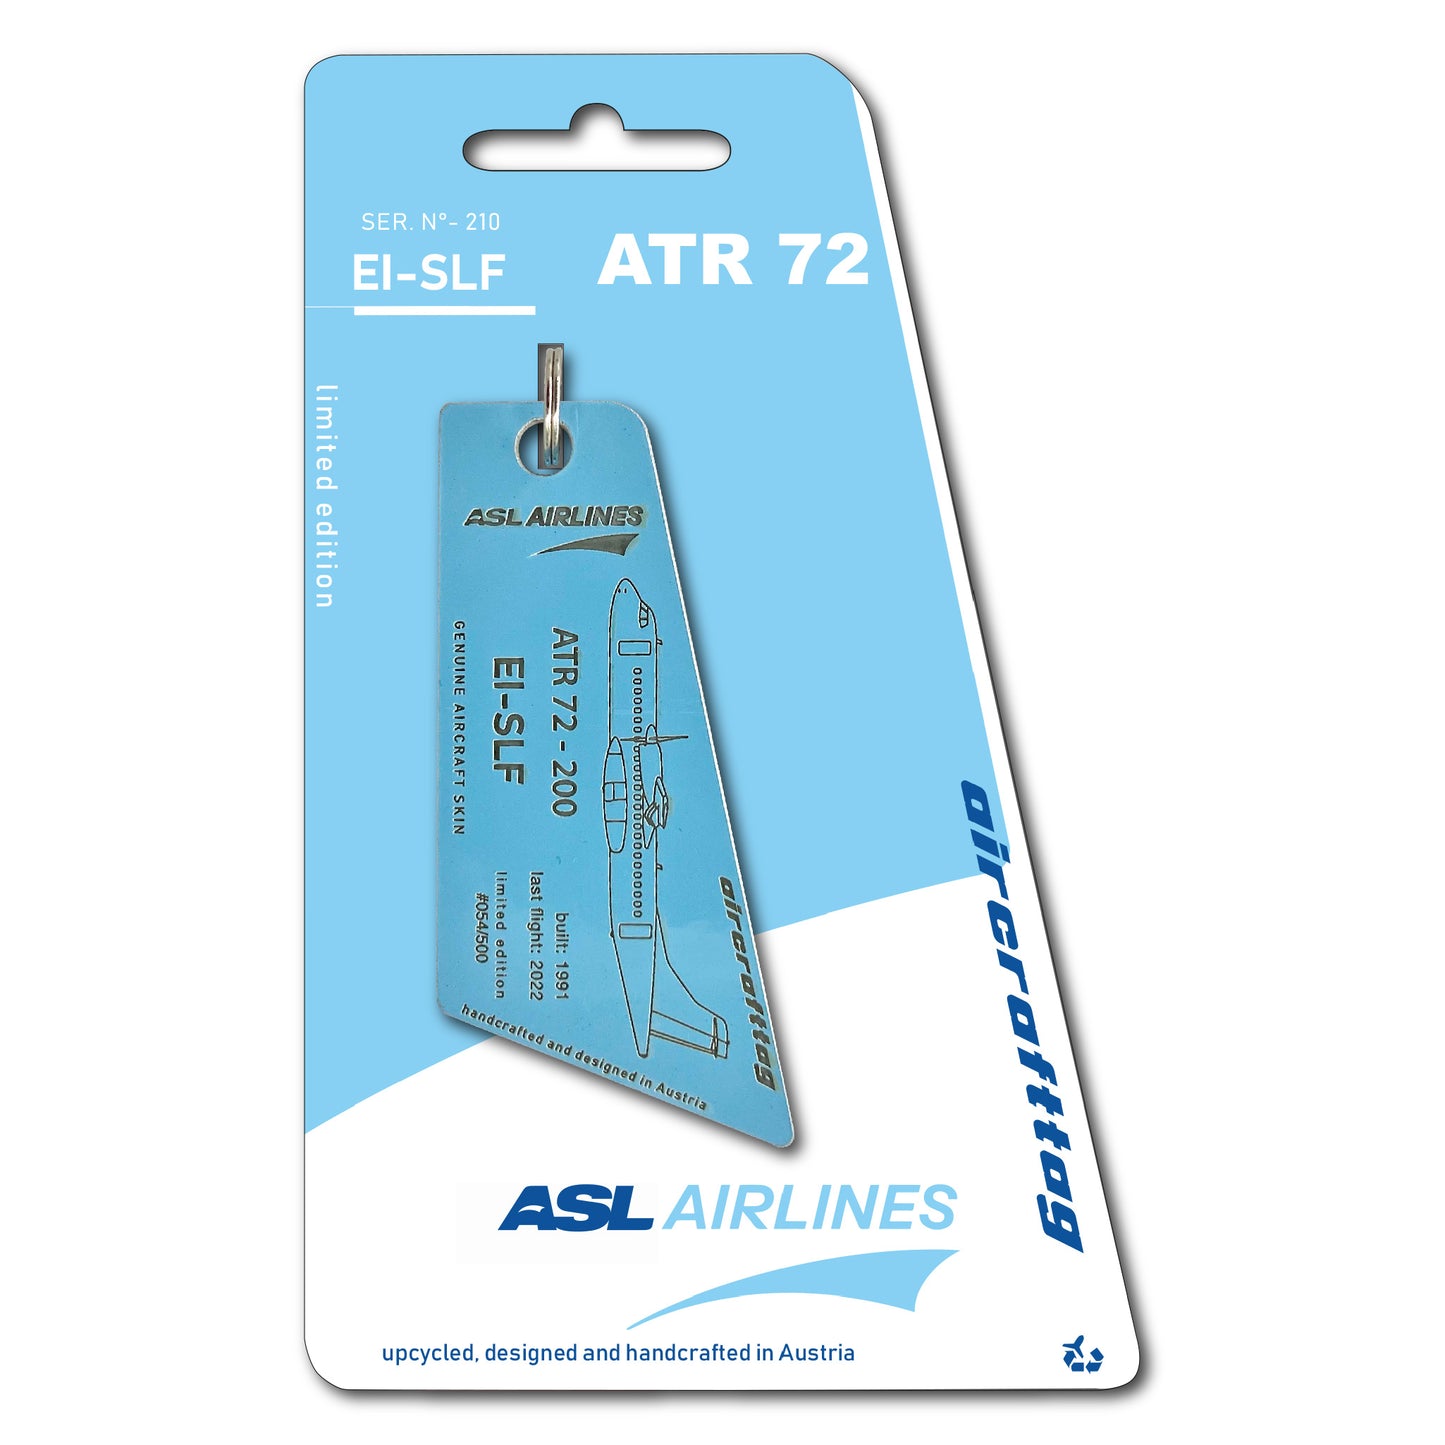 ATR 72 - ASL Airlines - EI-SLF - lightblue